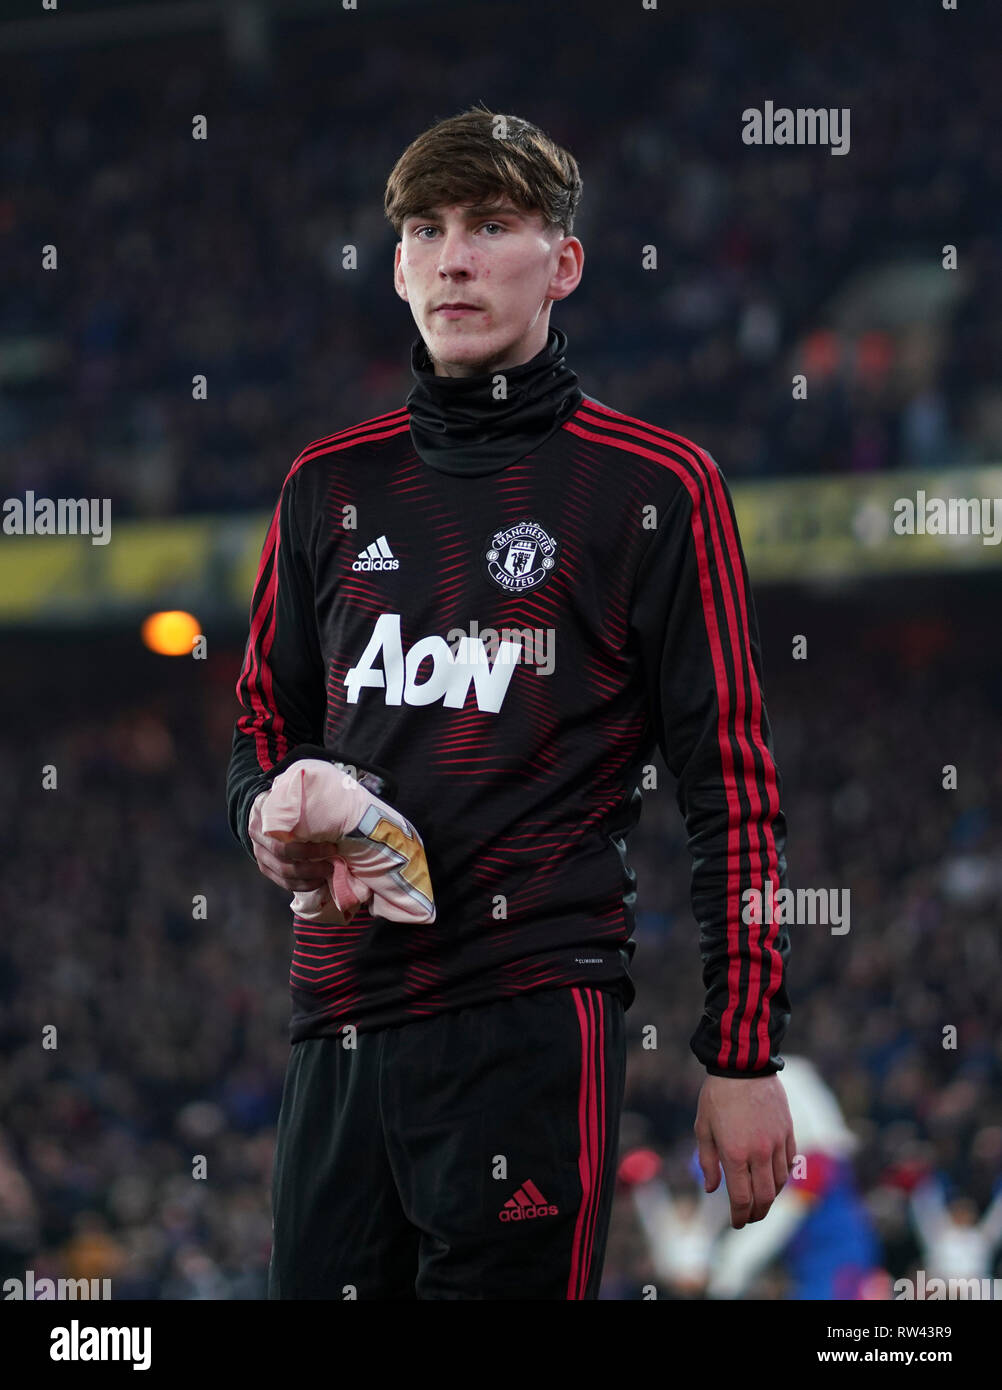 James Garner, Manchester United Stock Photo - Alamy